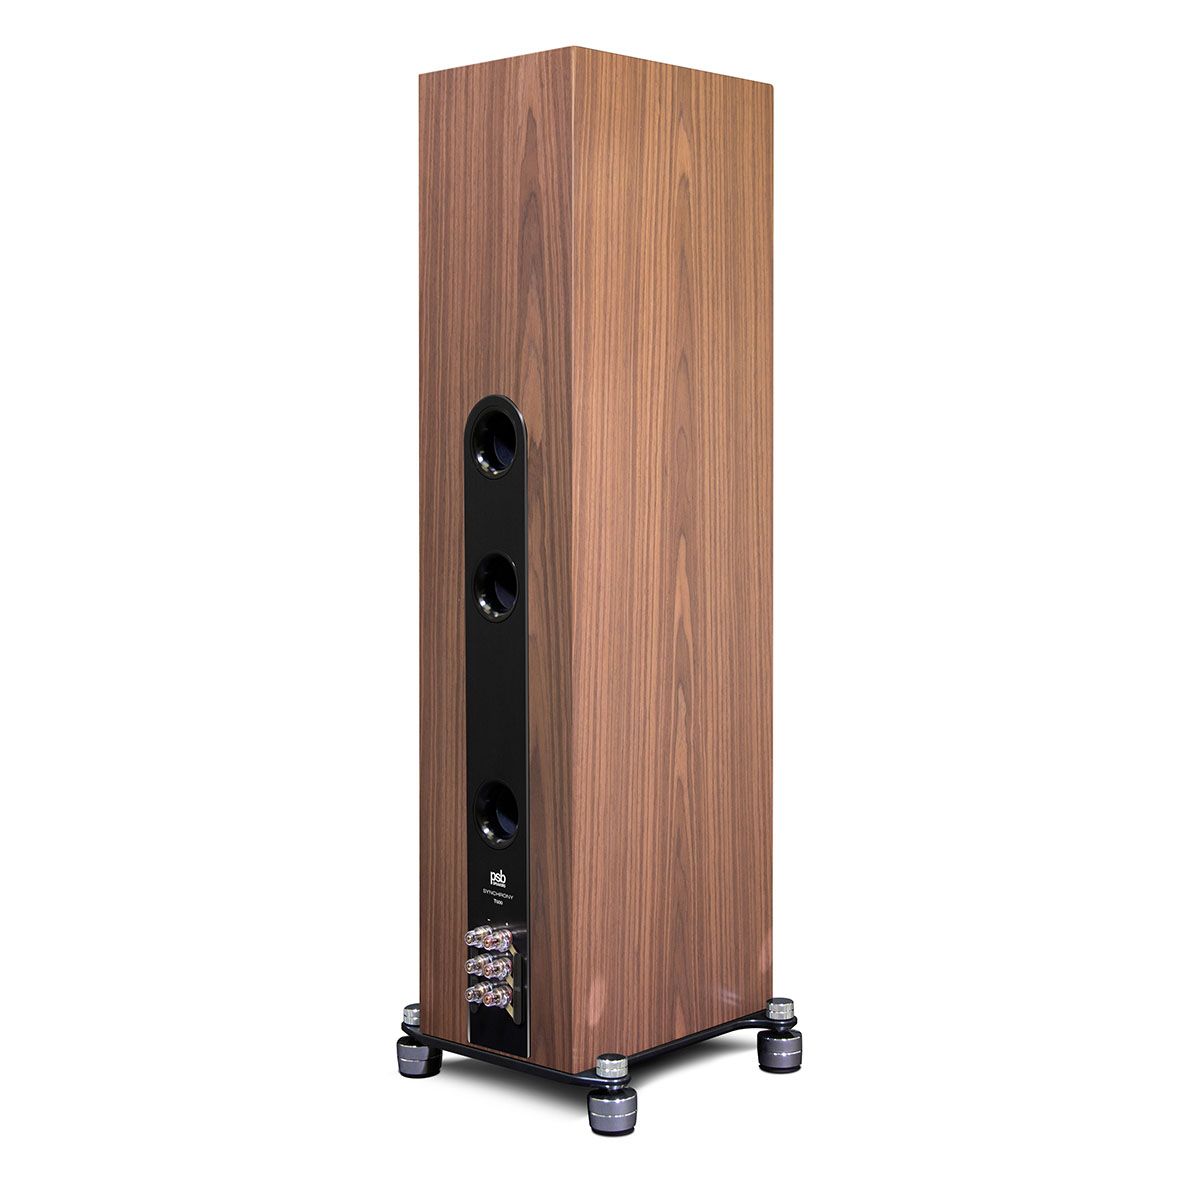 PSB Synchrony T600 Premium Tower Speaker - Walnut - single angled rear view